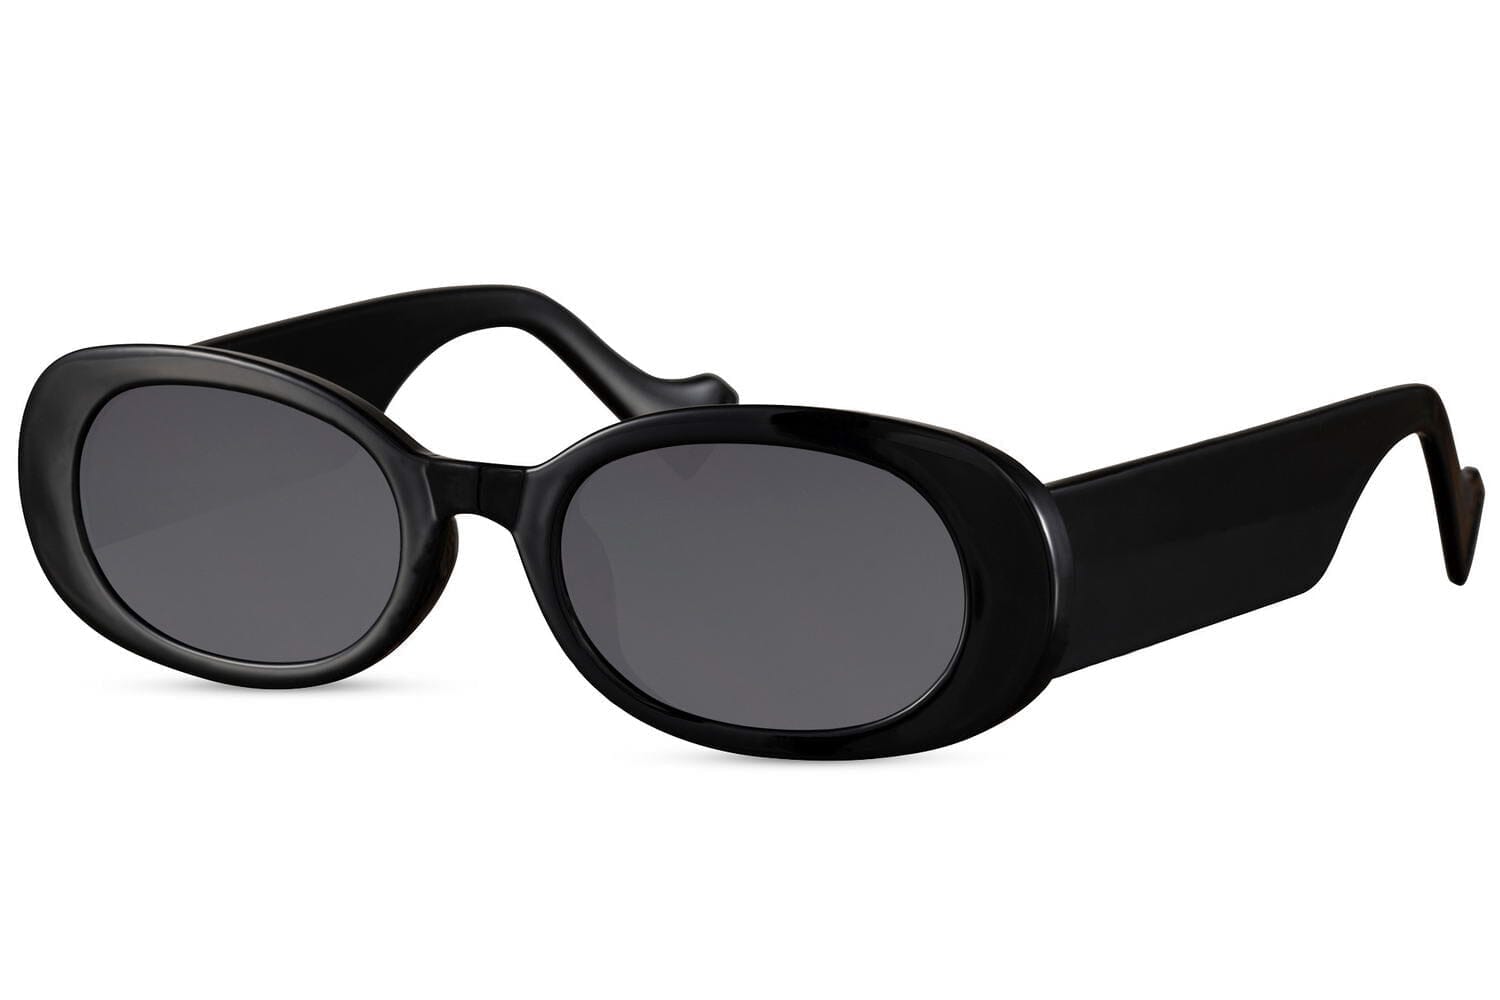 Oval acetate sunglasses. Black frames and black lenses.